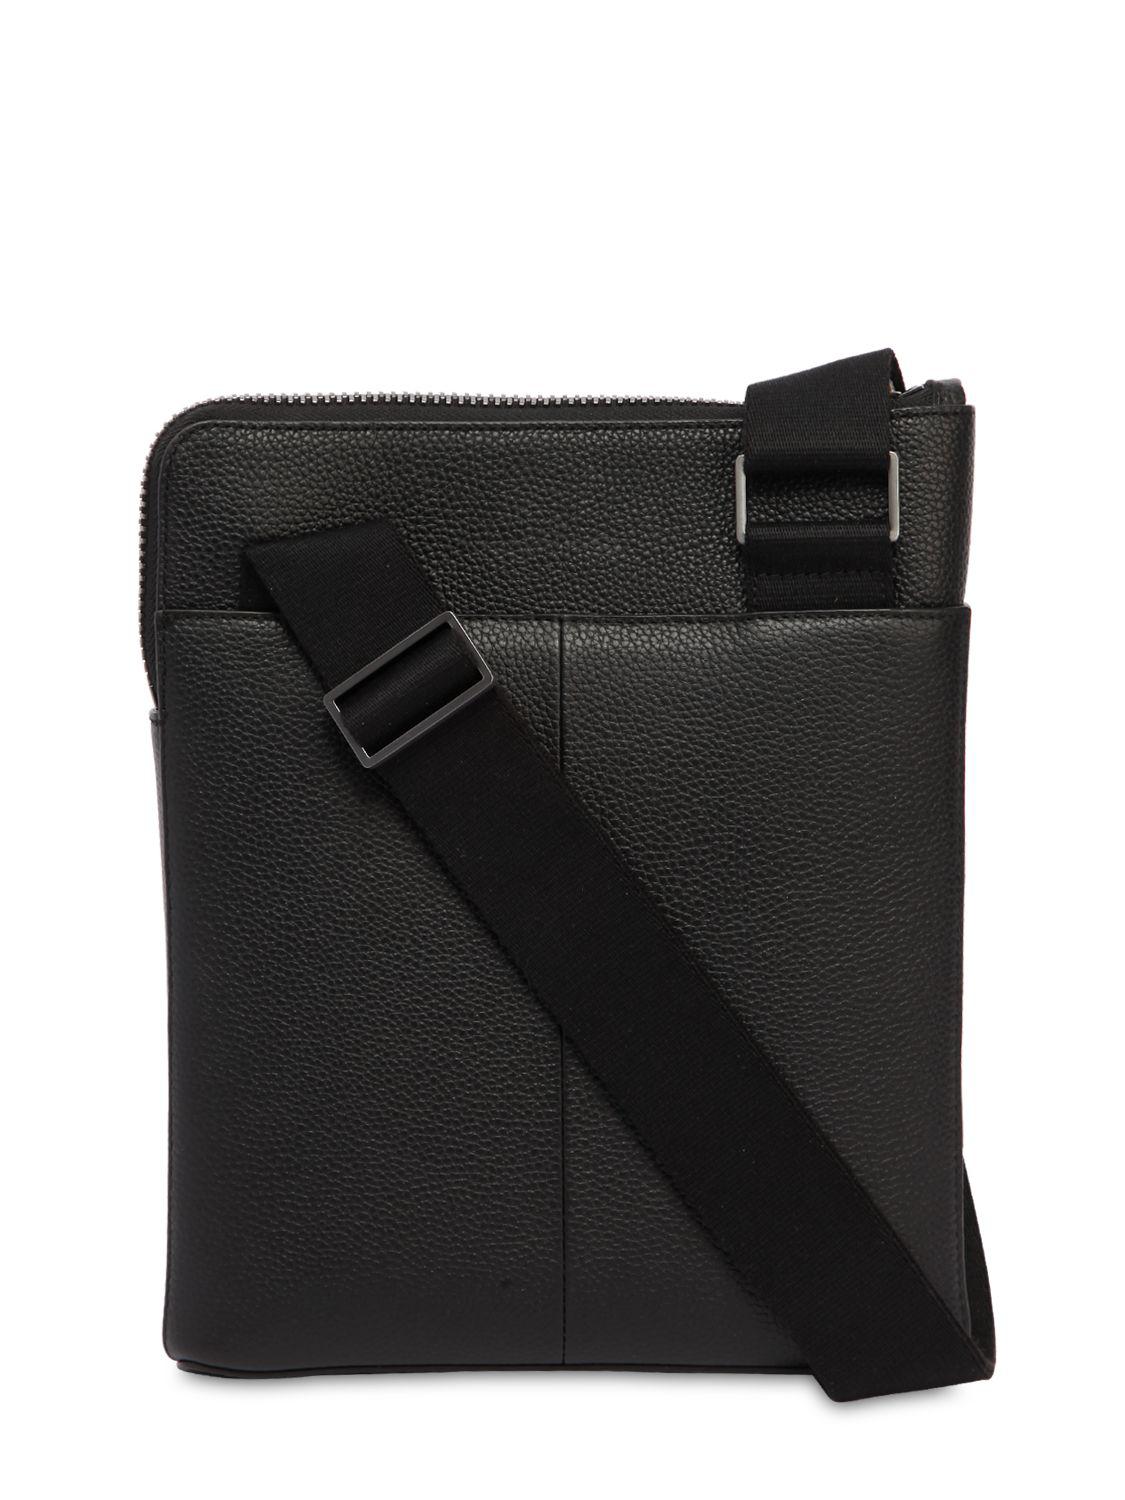 Calvin Klein Leather Crossbody Bag in Black for Men - Lyst